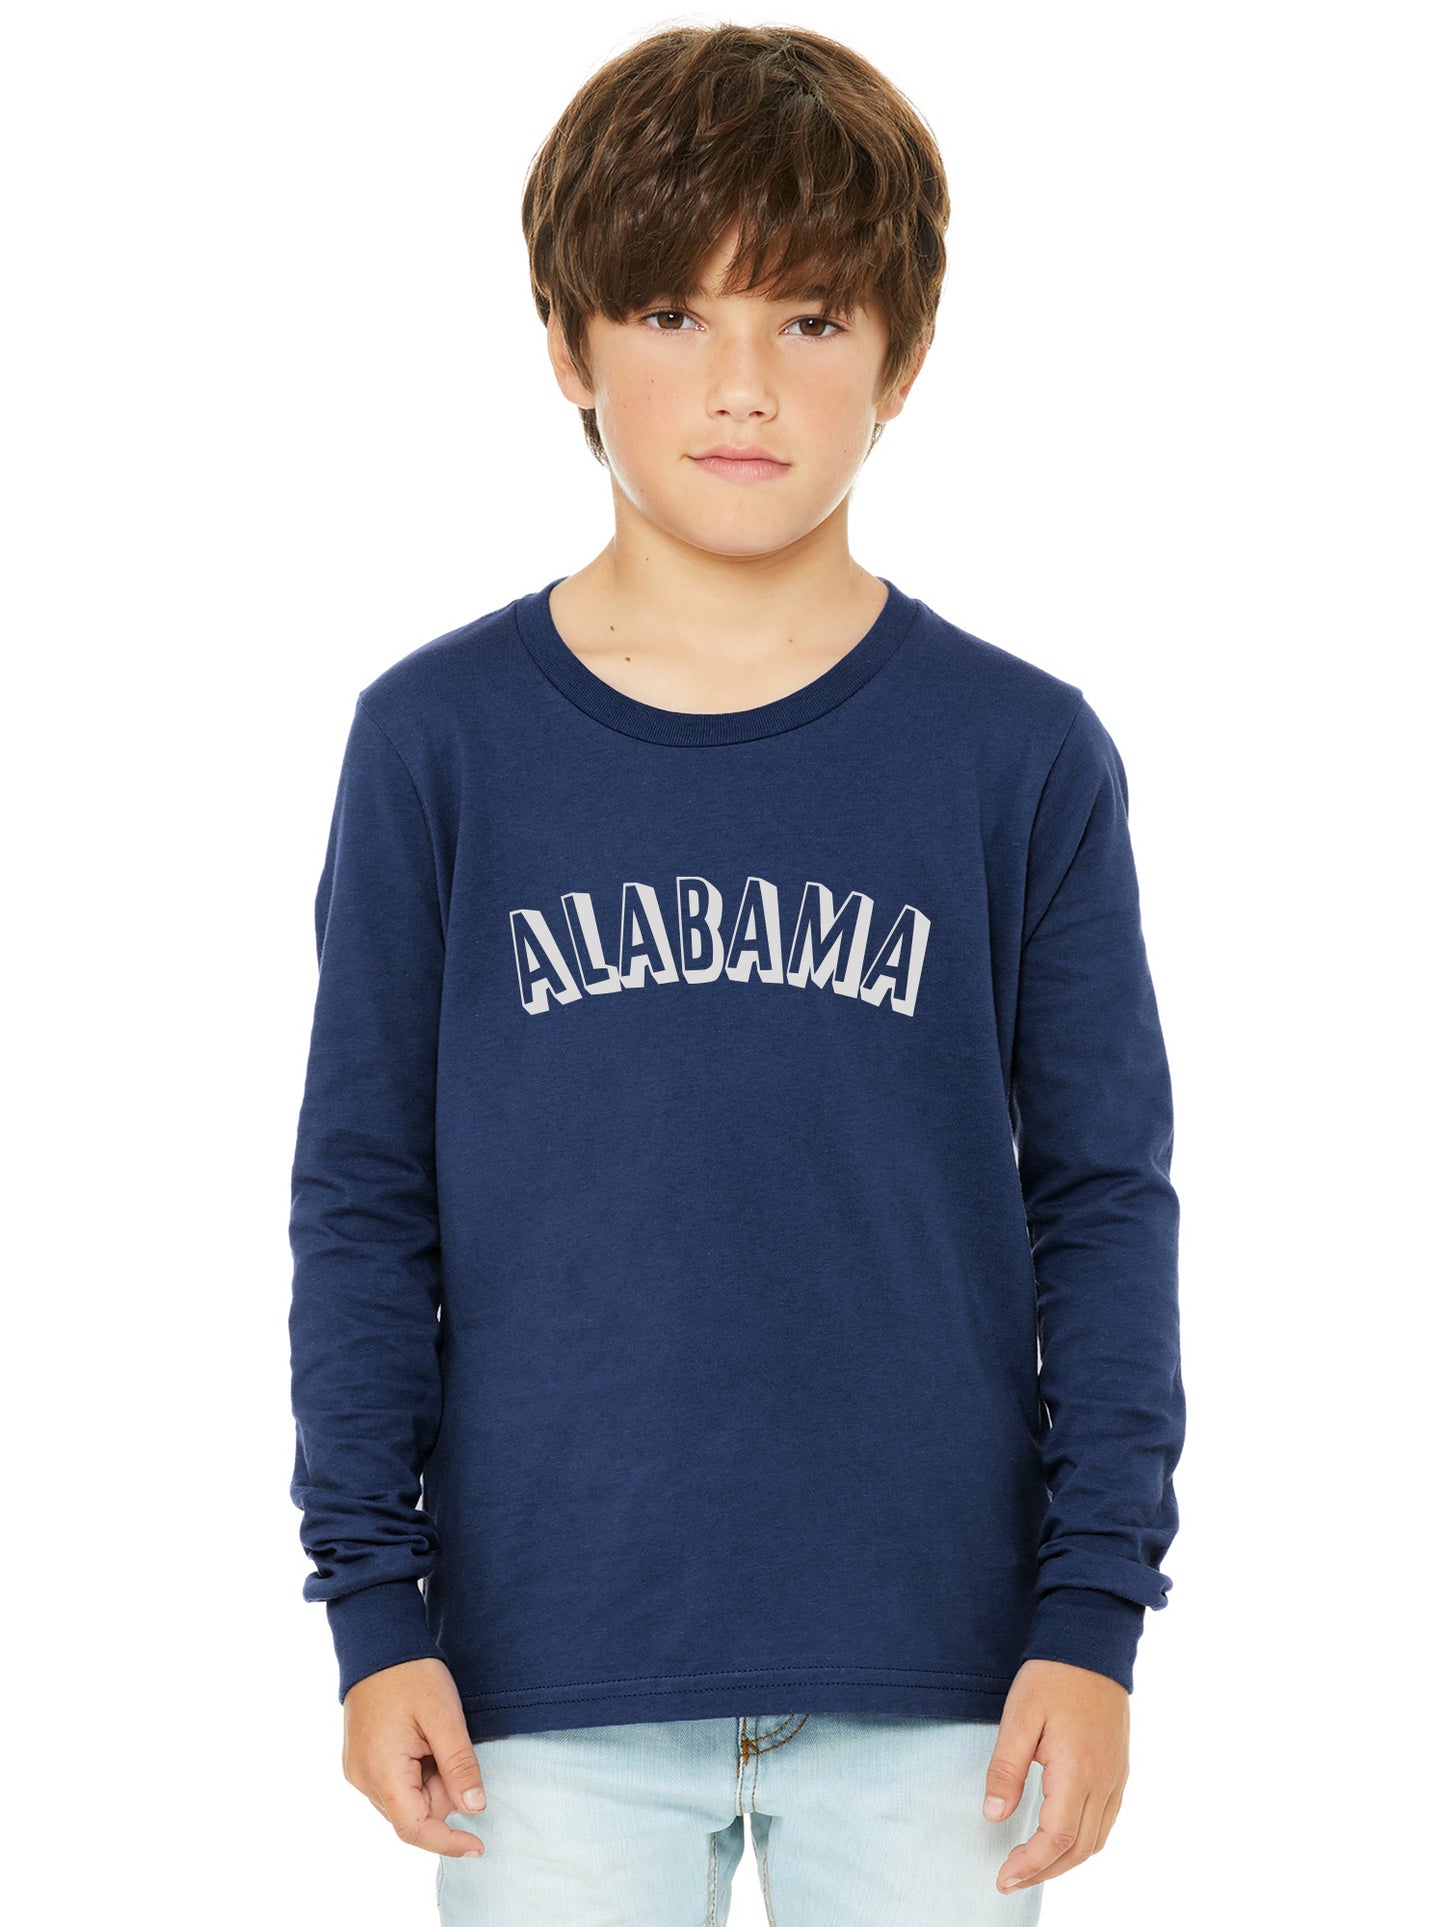 Daxton Youth Long Sleeve Alabama Basic Tshirt